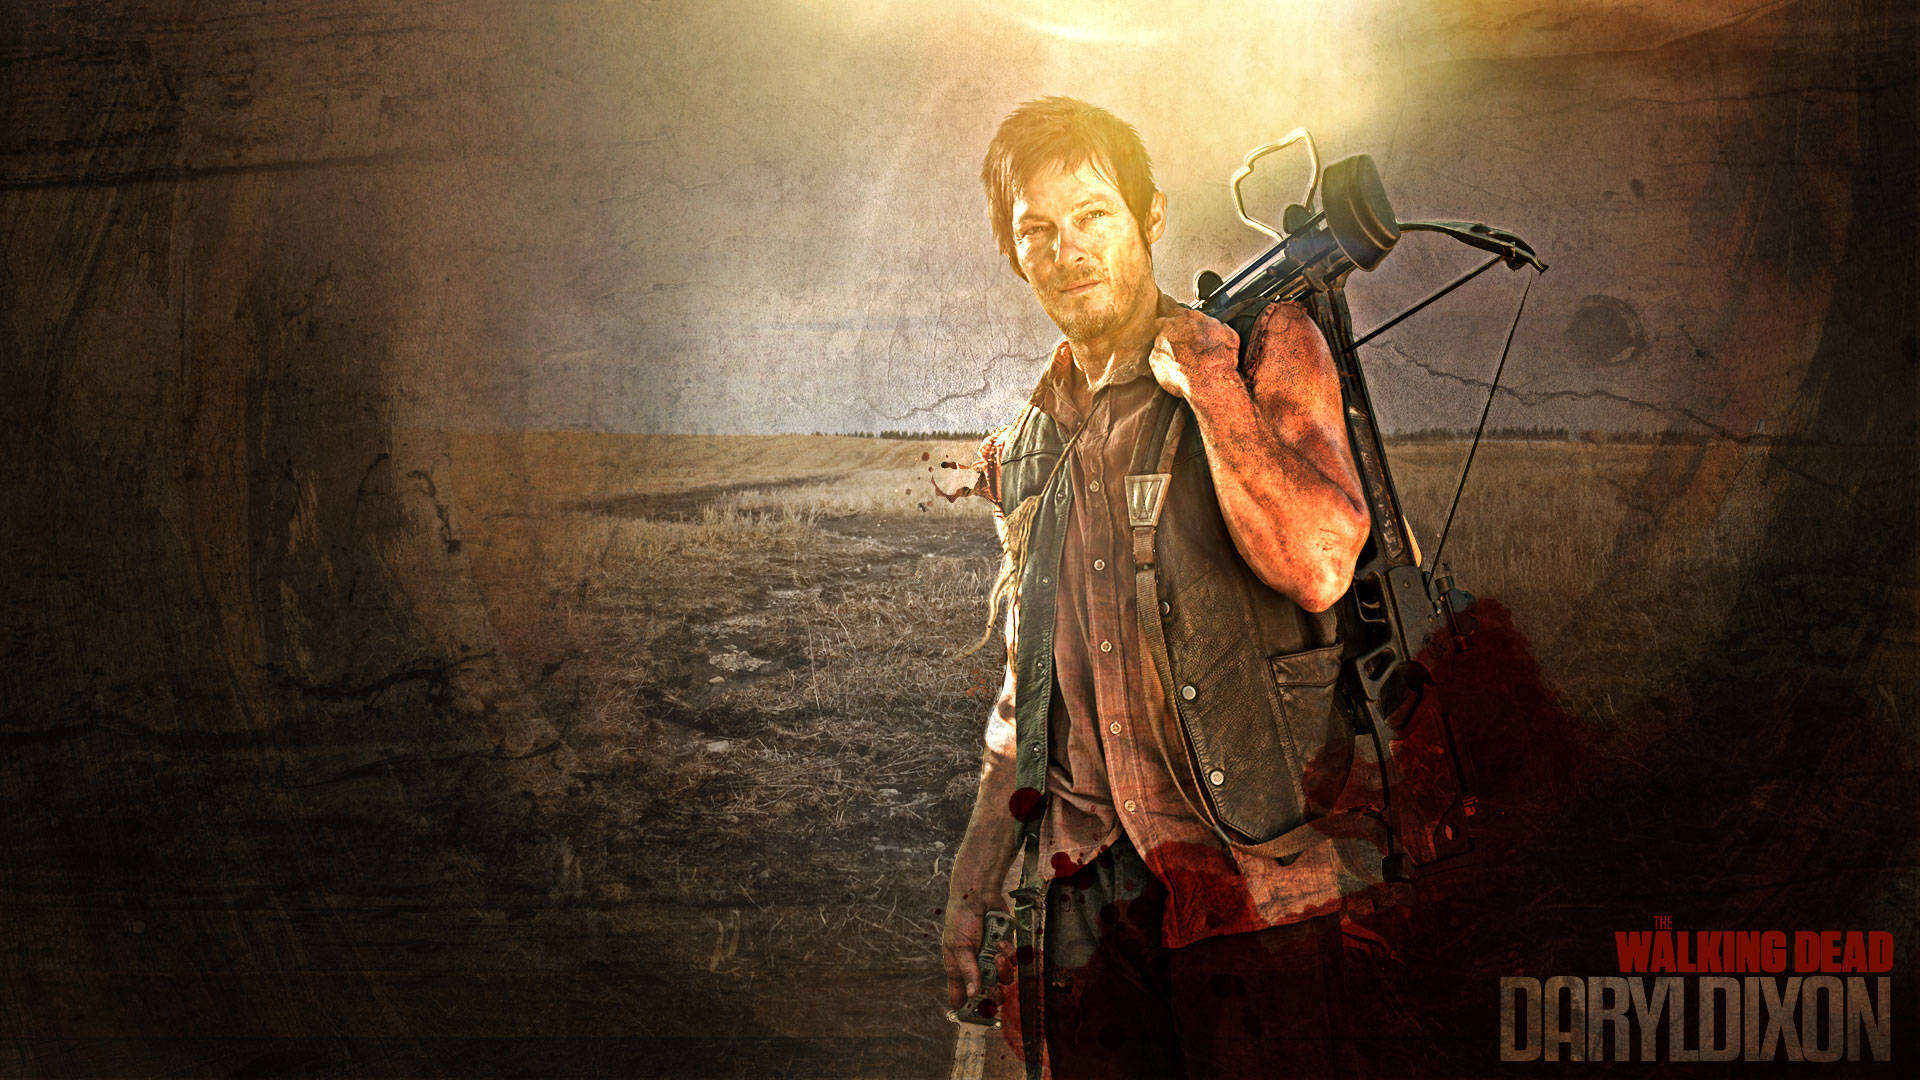 Daryl Dixon on the hunt in zombie-ridden terrain. Wallpaper